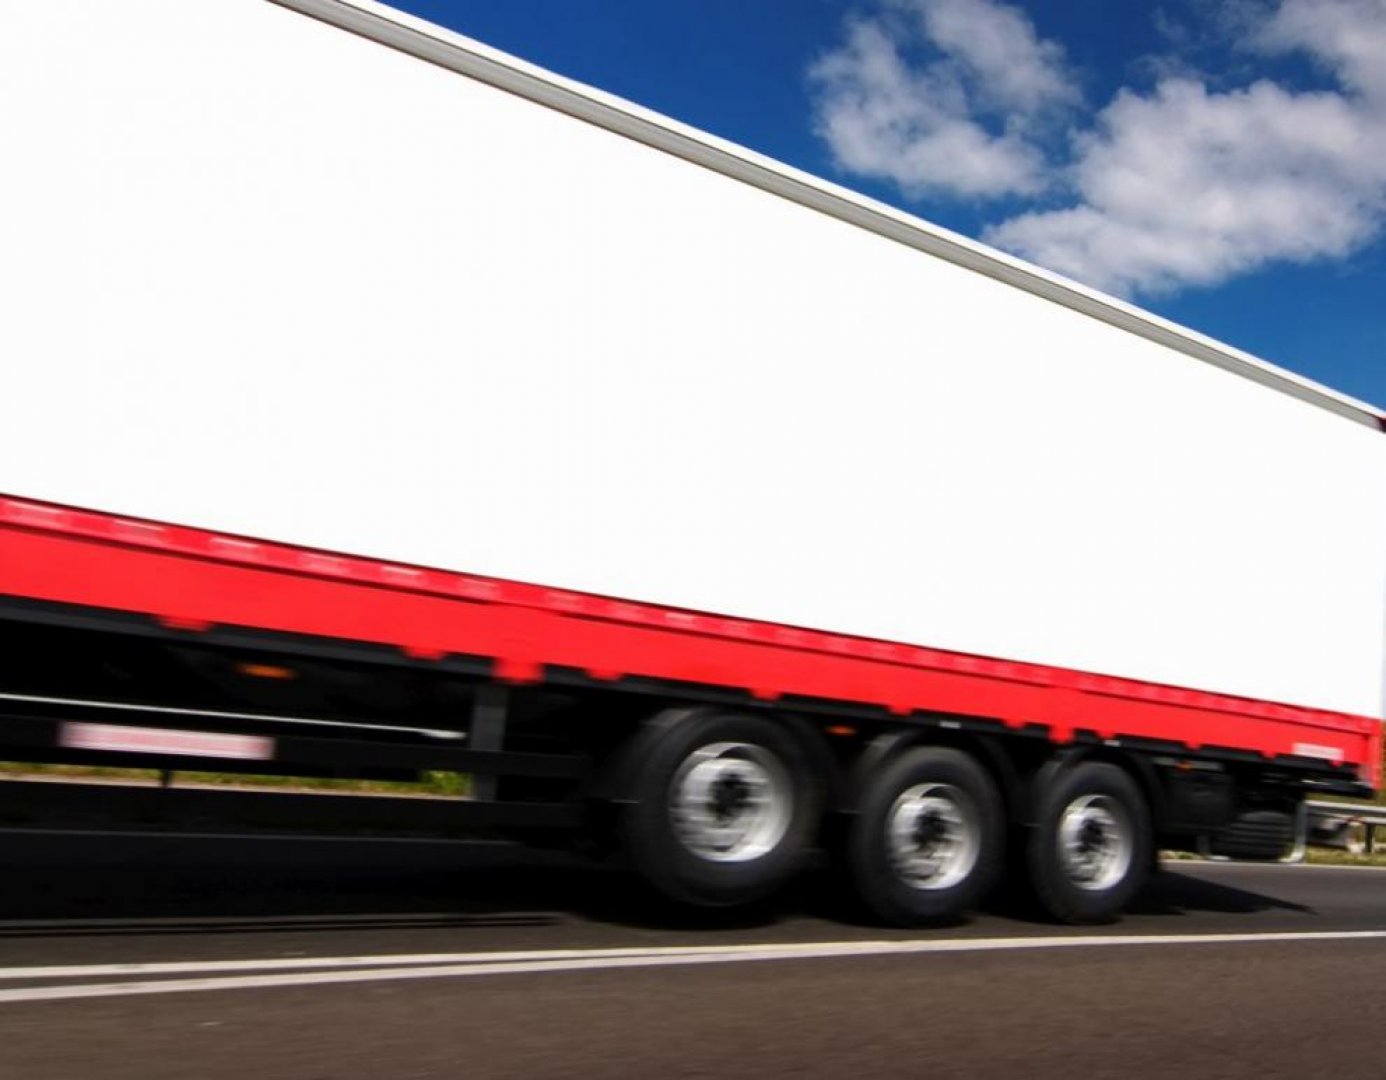 Без движение на камиони над 12 т по автомагистралите до 20 часа днес - E-Burgas.com